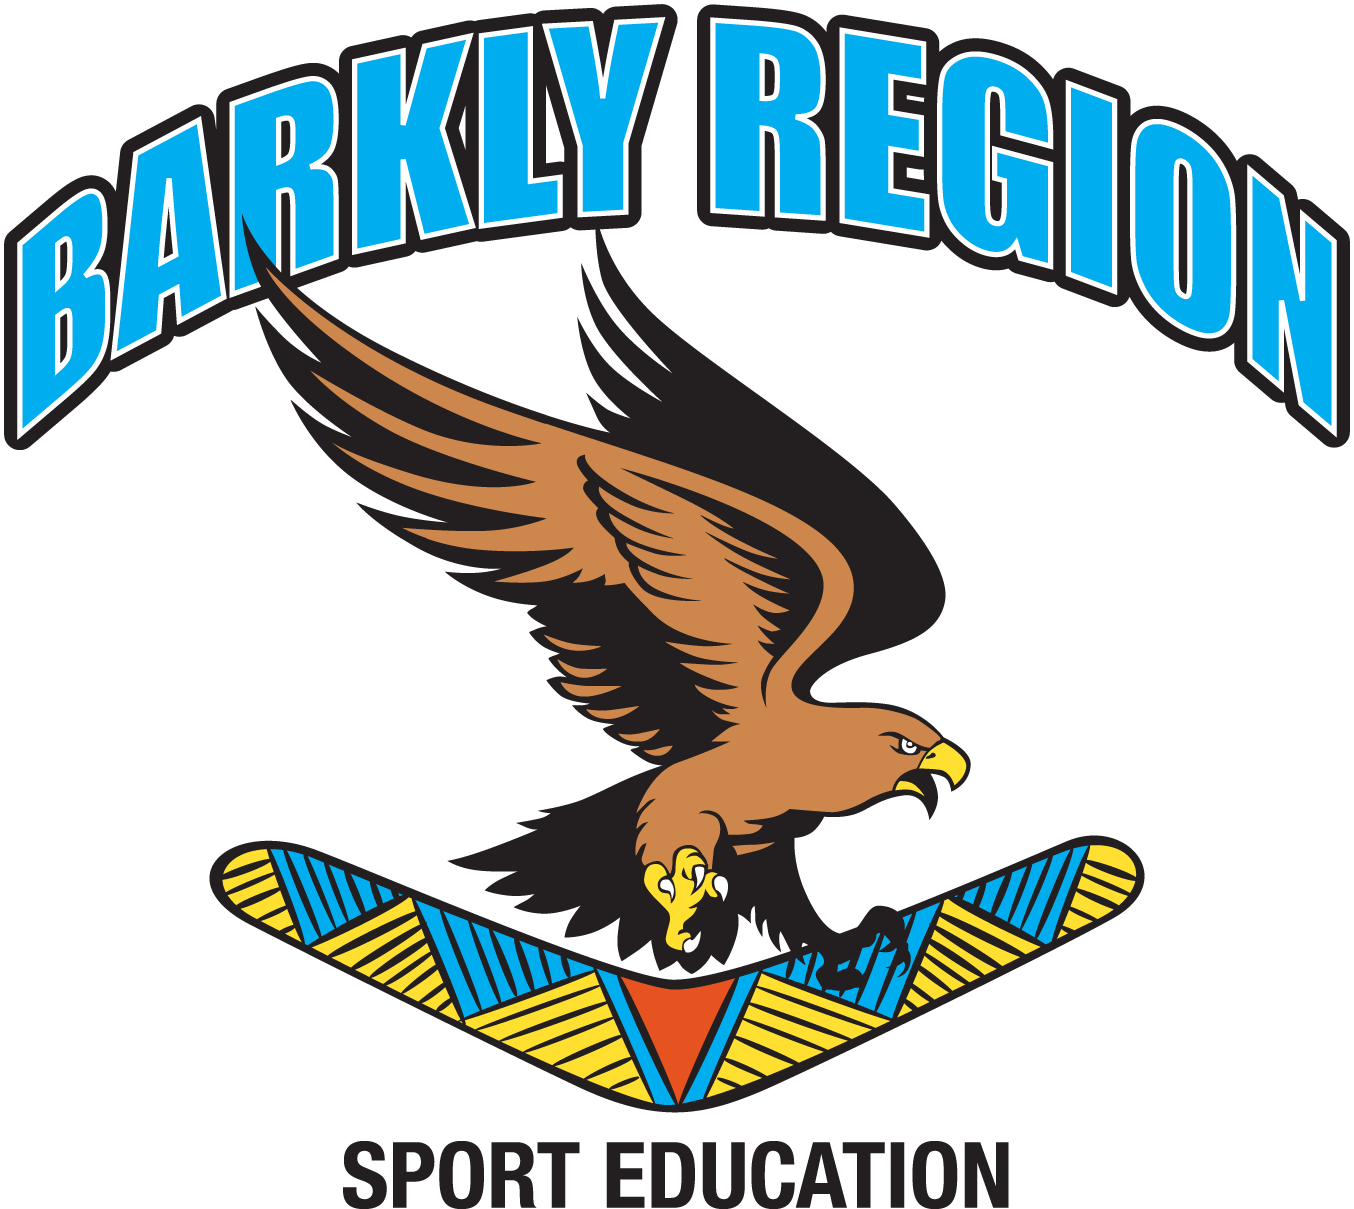 SSNT Barkly region logo